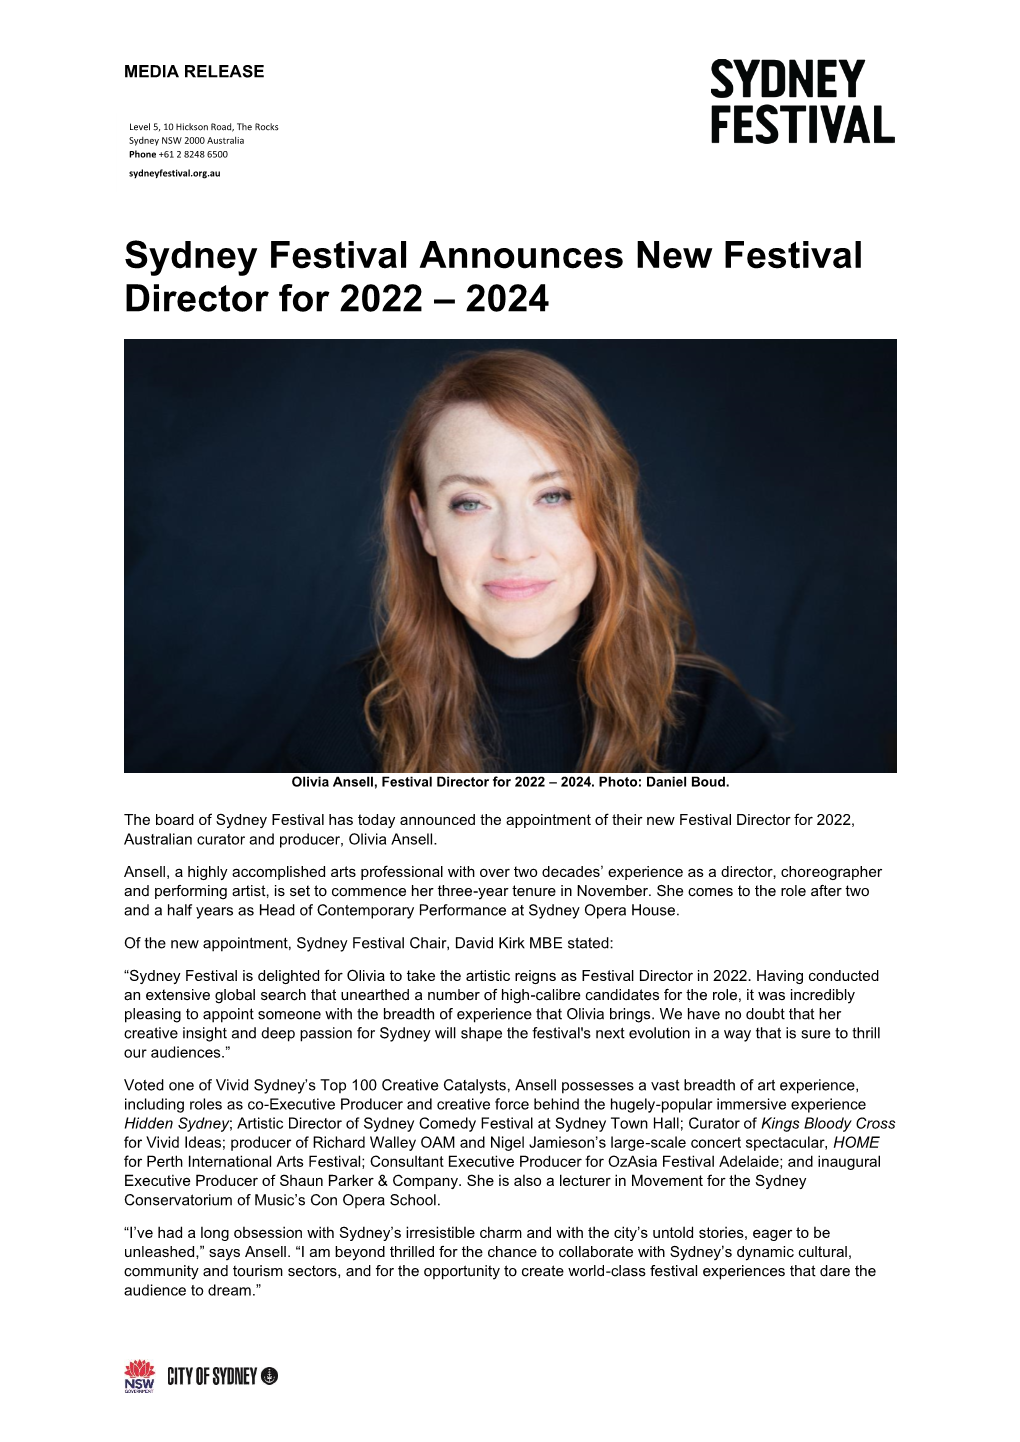 Sydney Festival Announces New Festival Director for 2022 – 2024